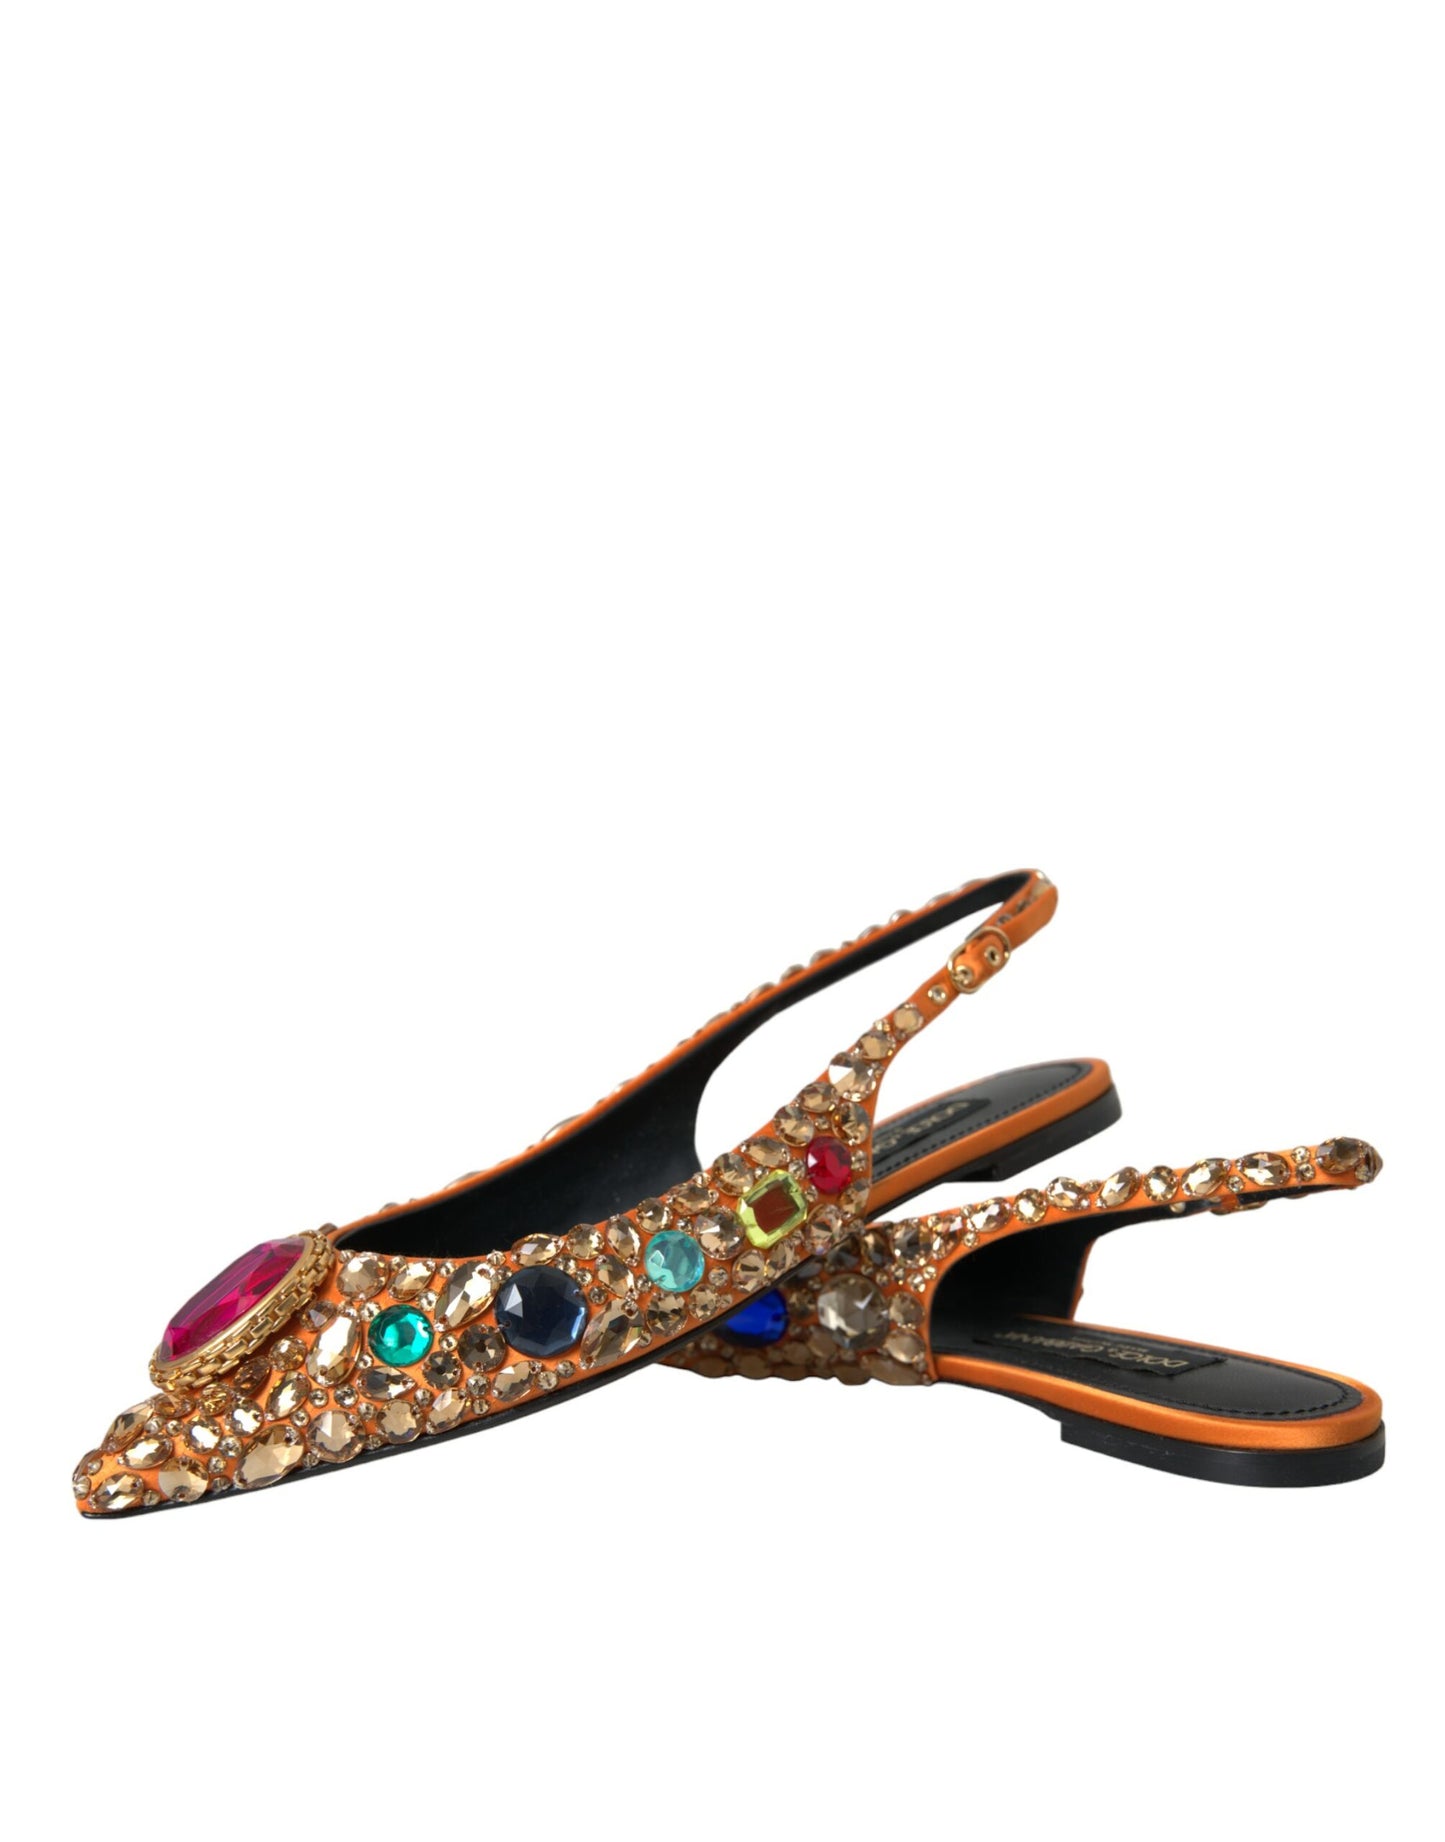 Dolce & Gabbana Orange Satin Crystals Flats Sandals Shoes